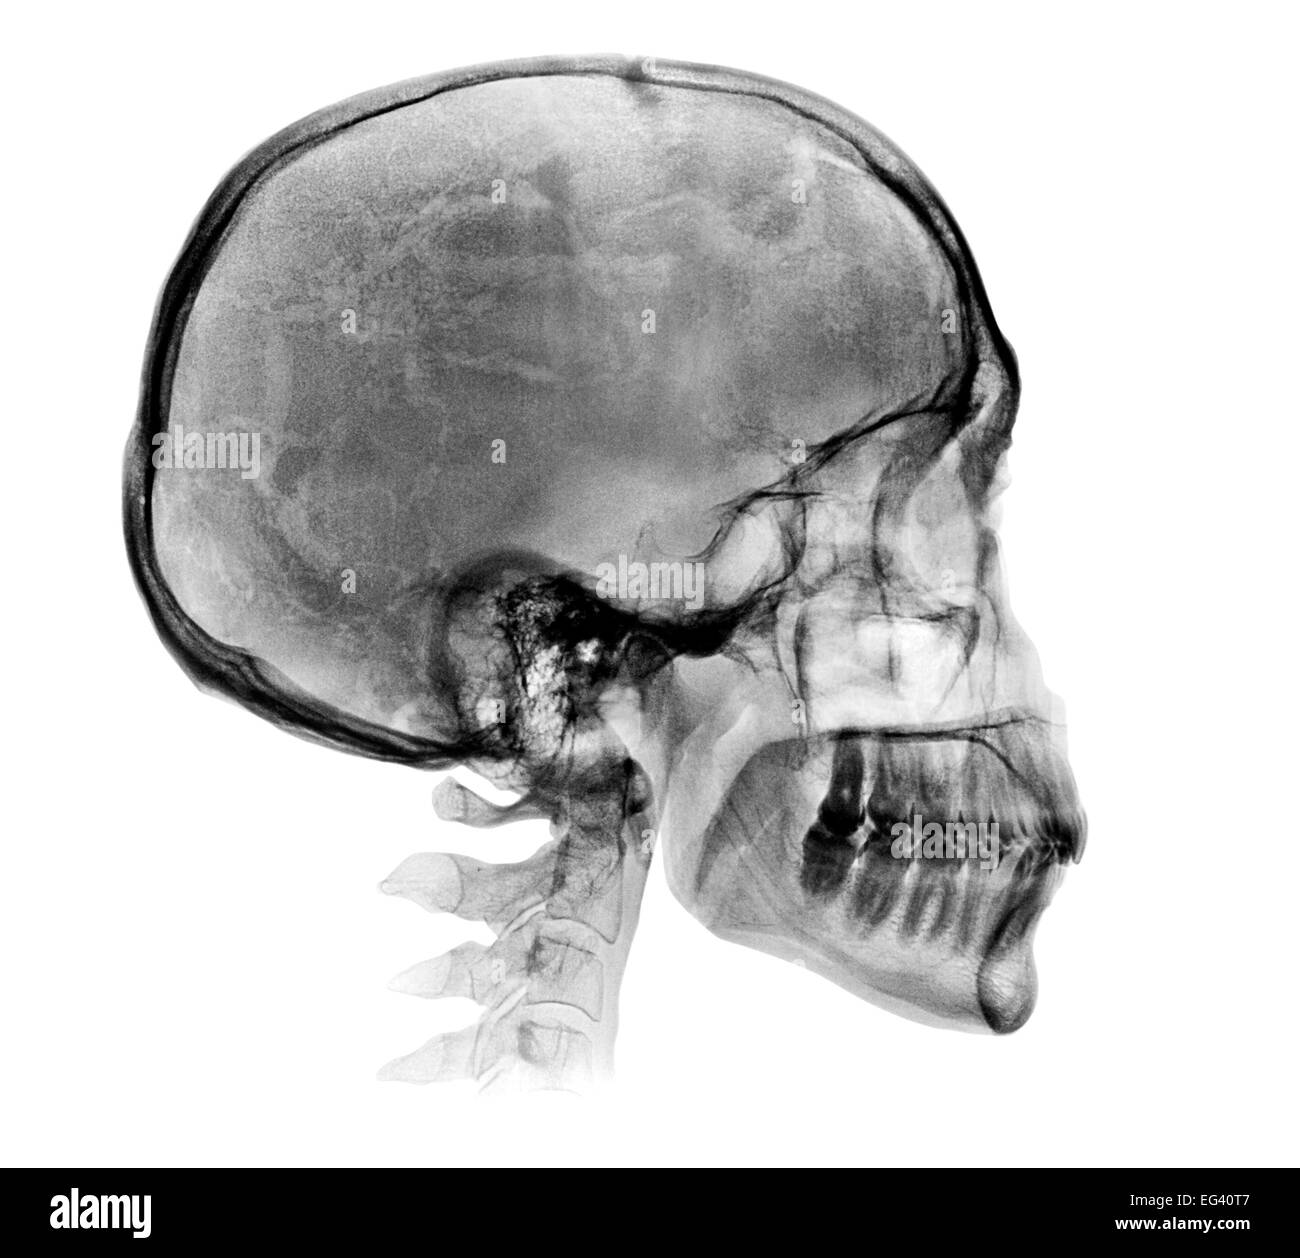 Human skull X-ray image isolated on white Stock Photo